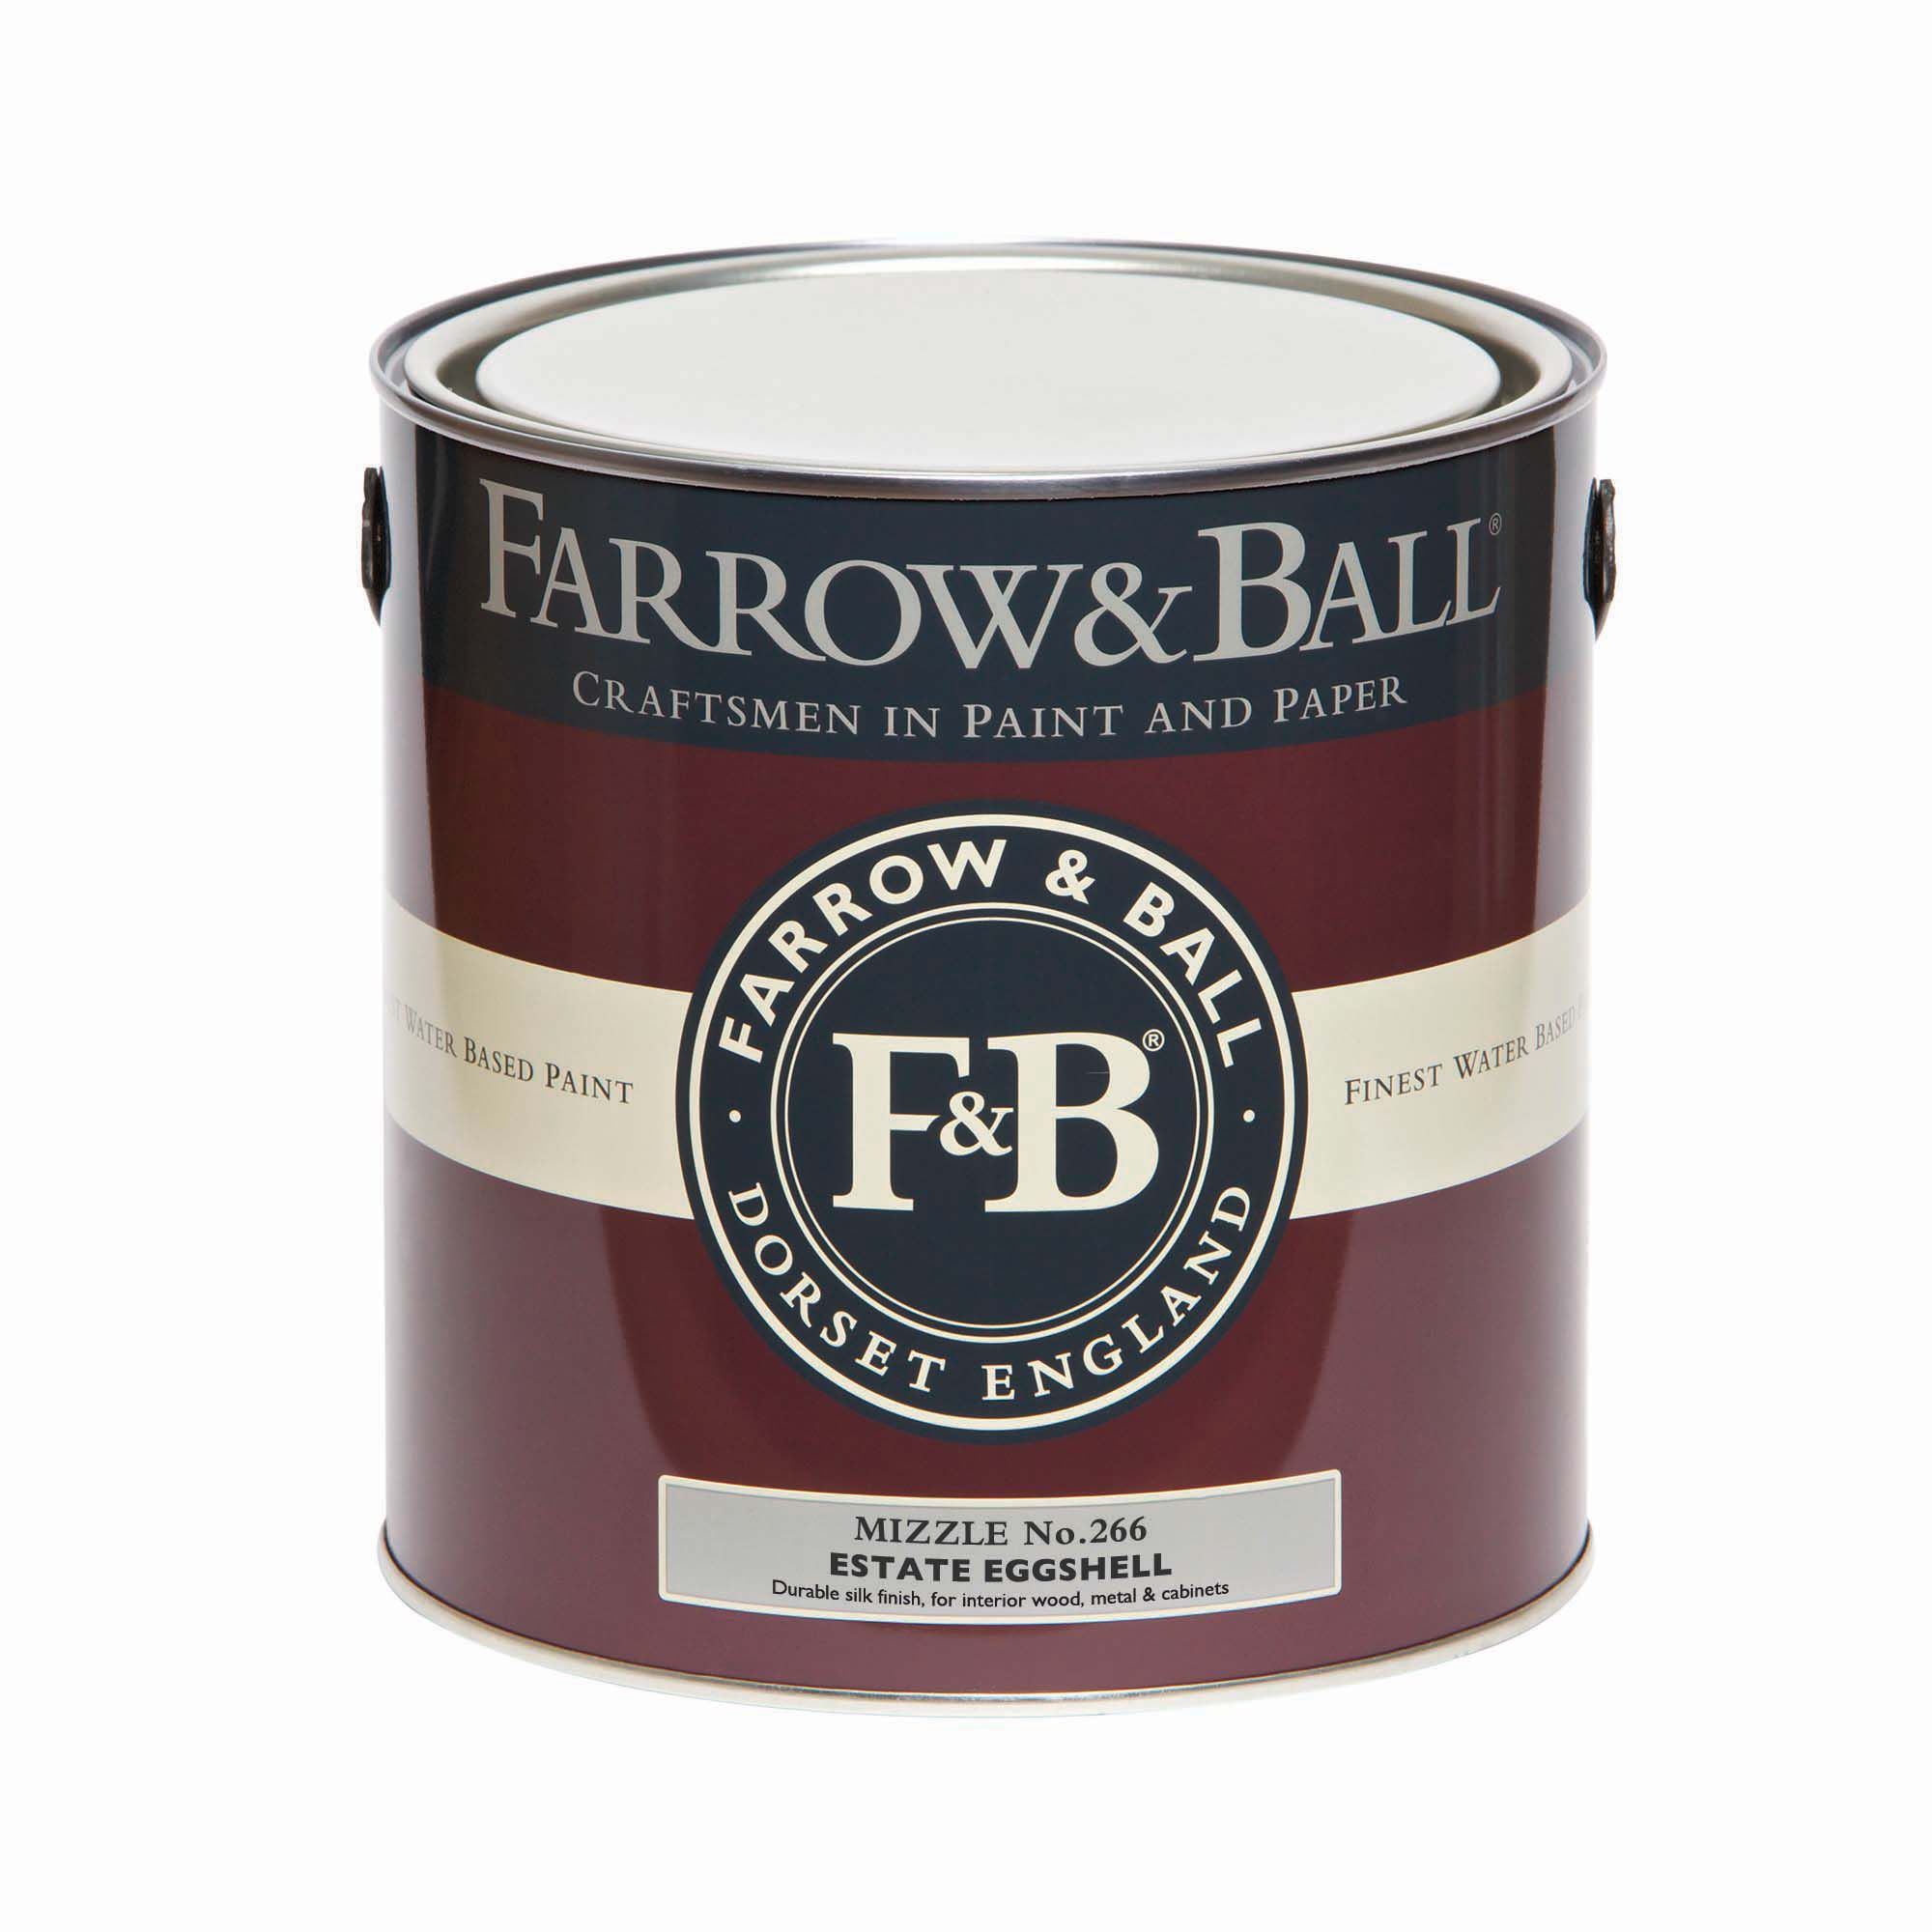 Farrow & Ball Estate Mizzle No.266 Eggshell Paint, 2.5L